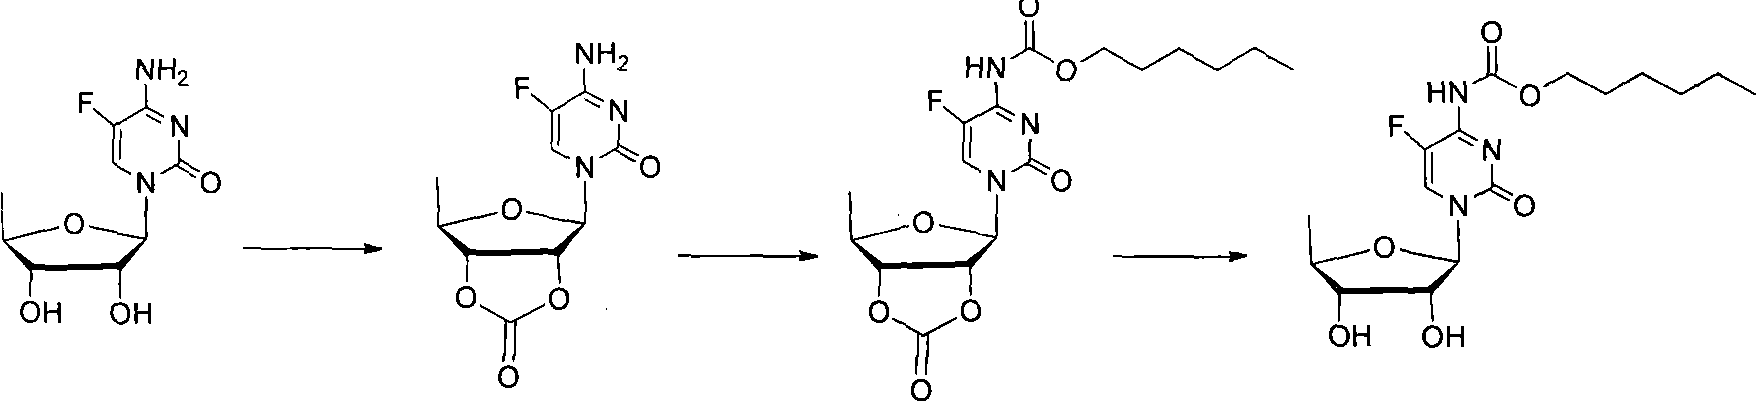 Synthesis method of antineoplastic medicine capecitabine